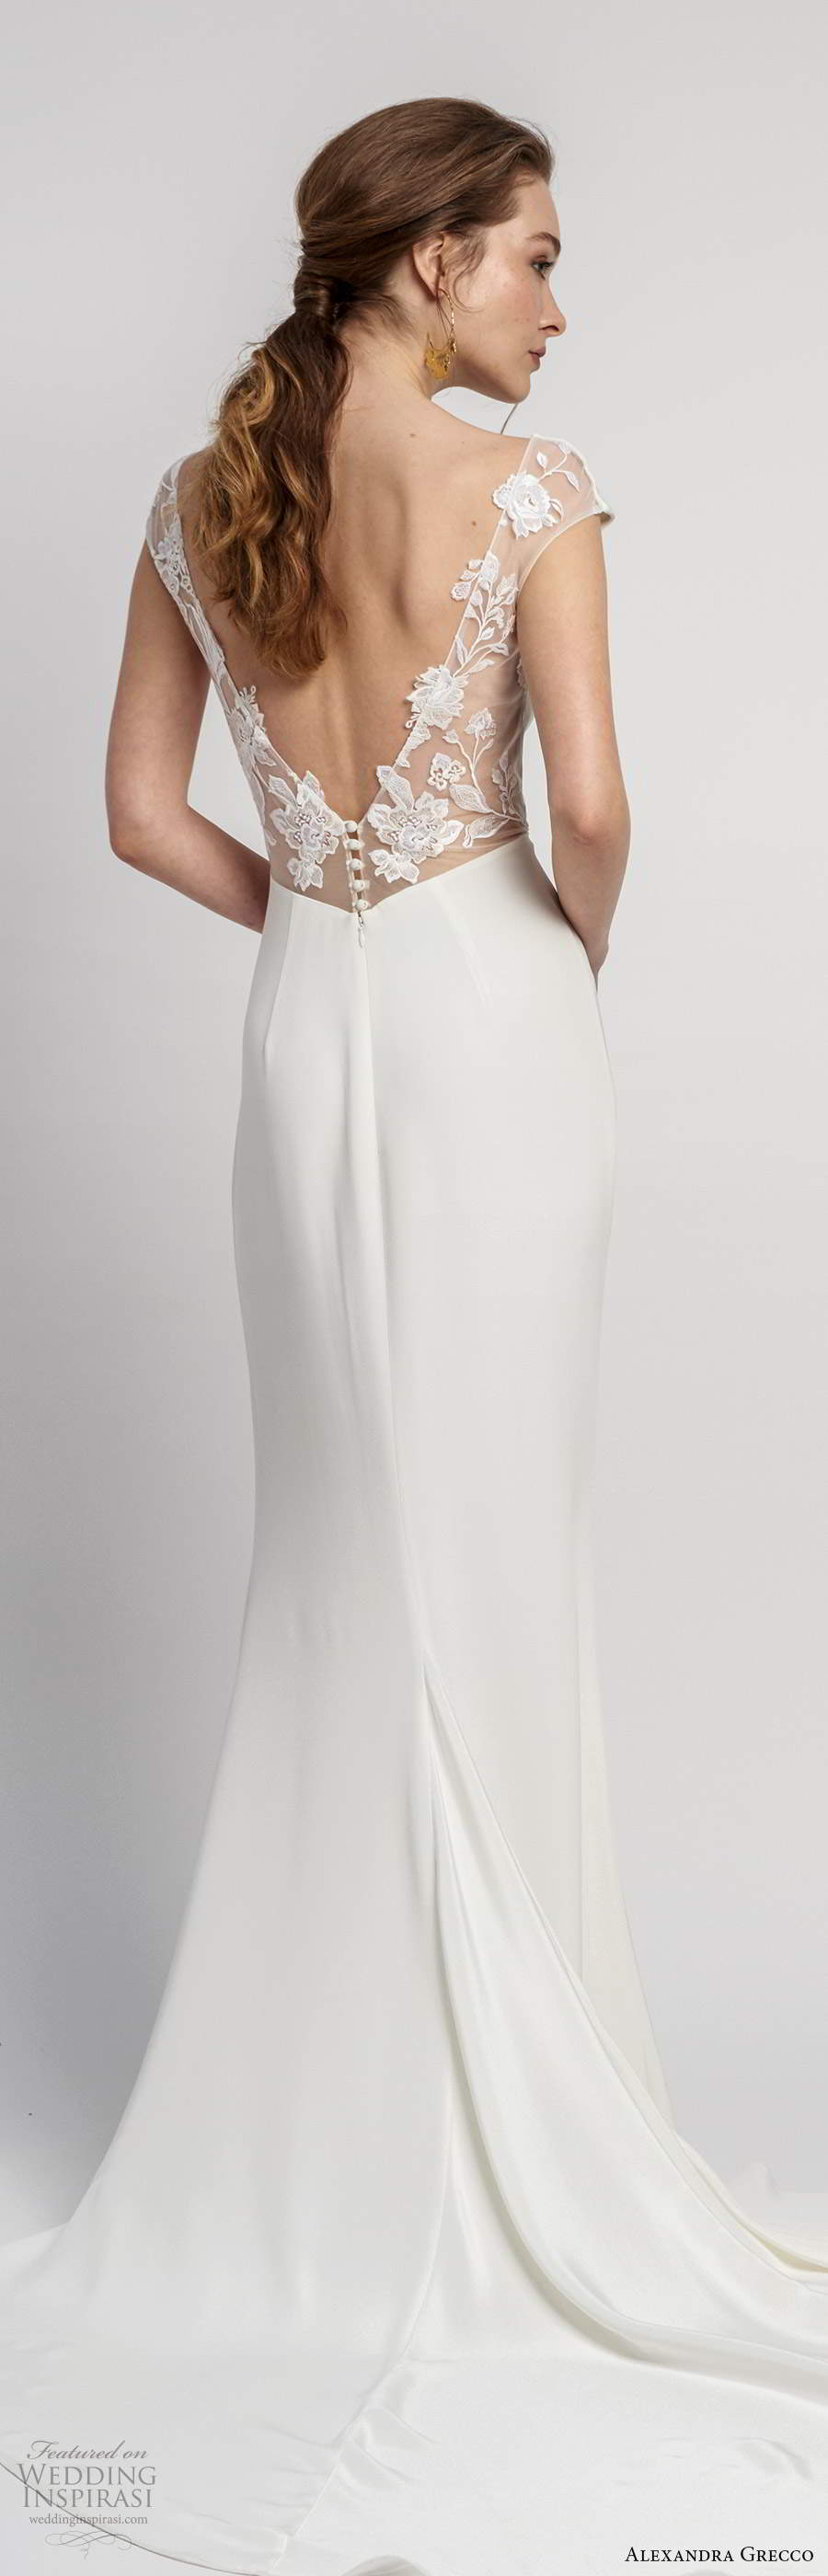 alexandra grecco 2020 bridal cap sleeves deep v neckline clean minimalist modified a line wedding dress slit skirt sheer v back cathedral train (7) zbv